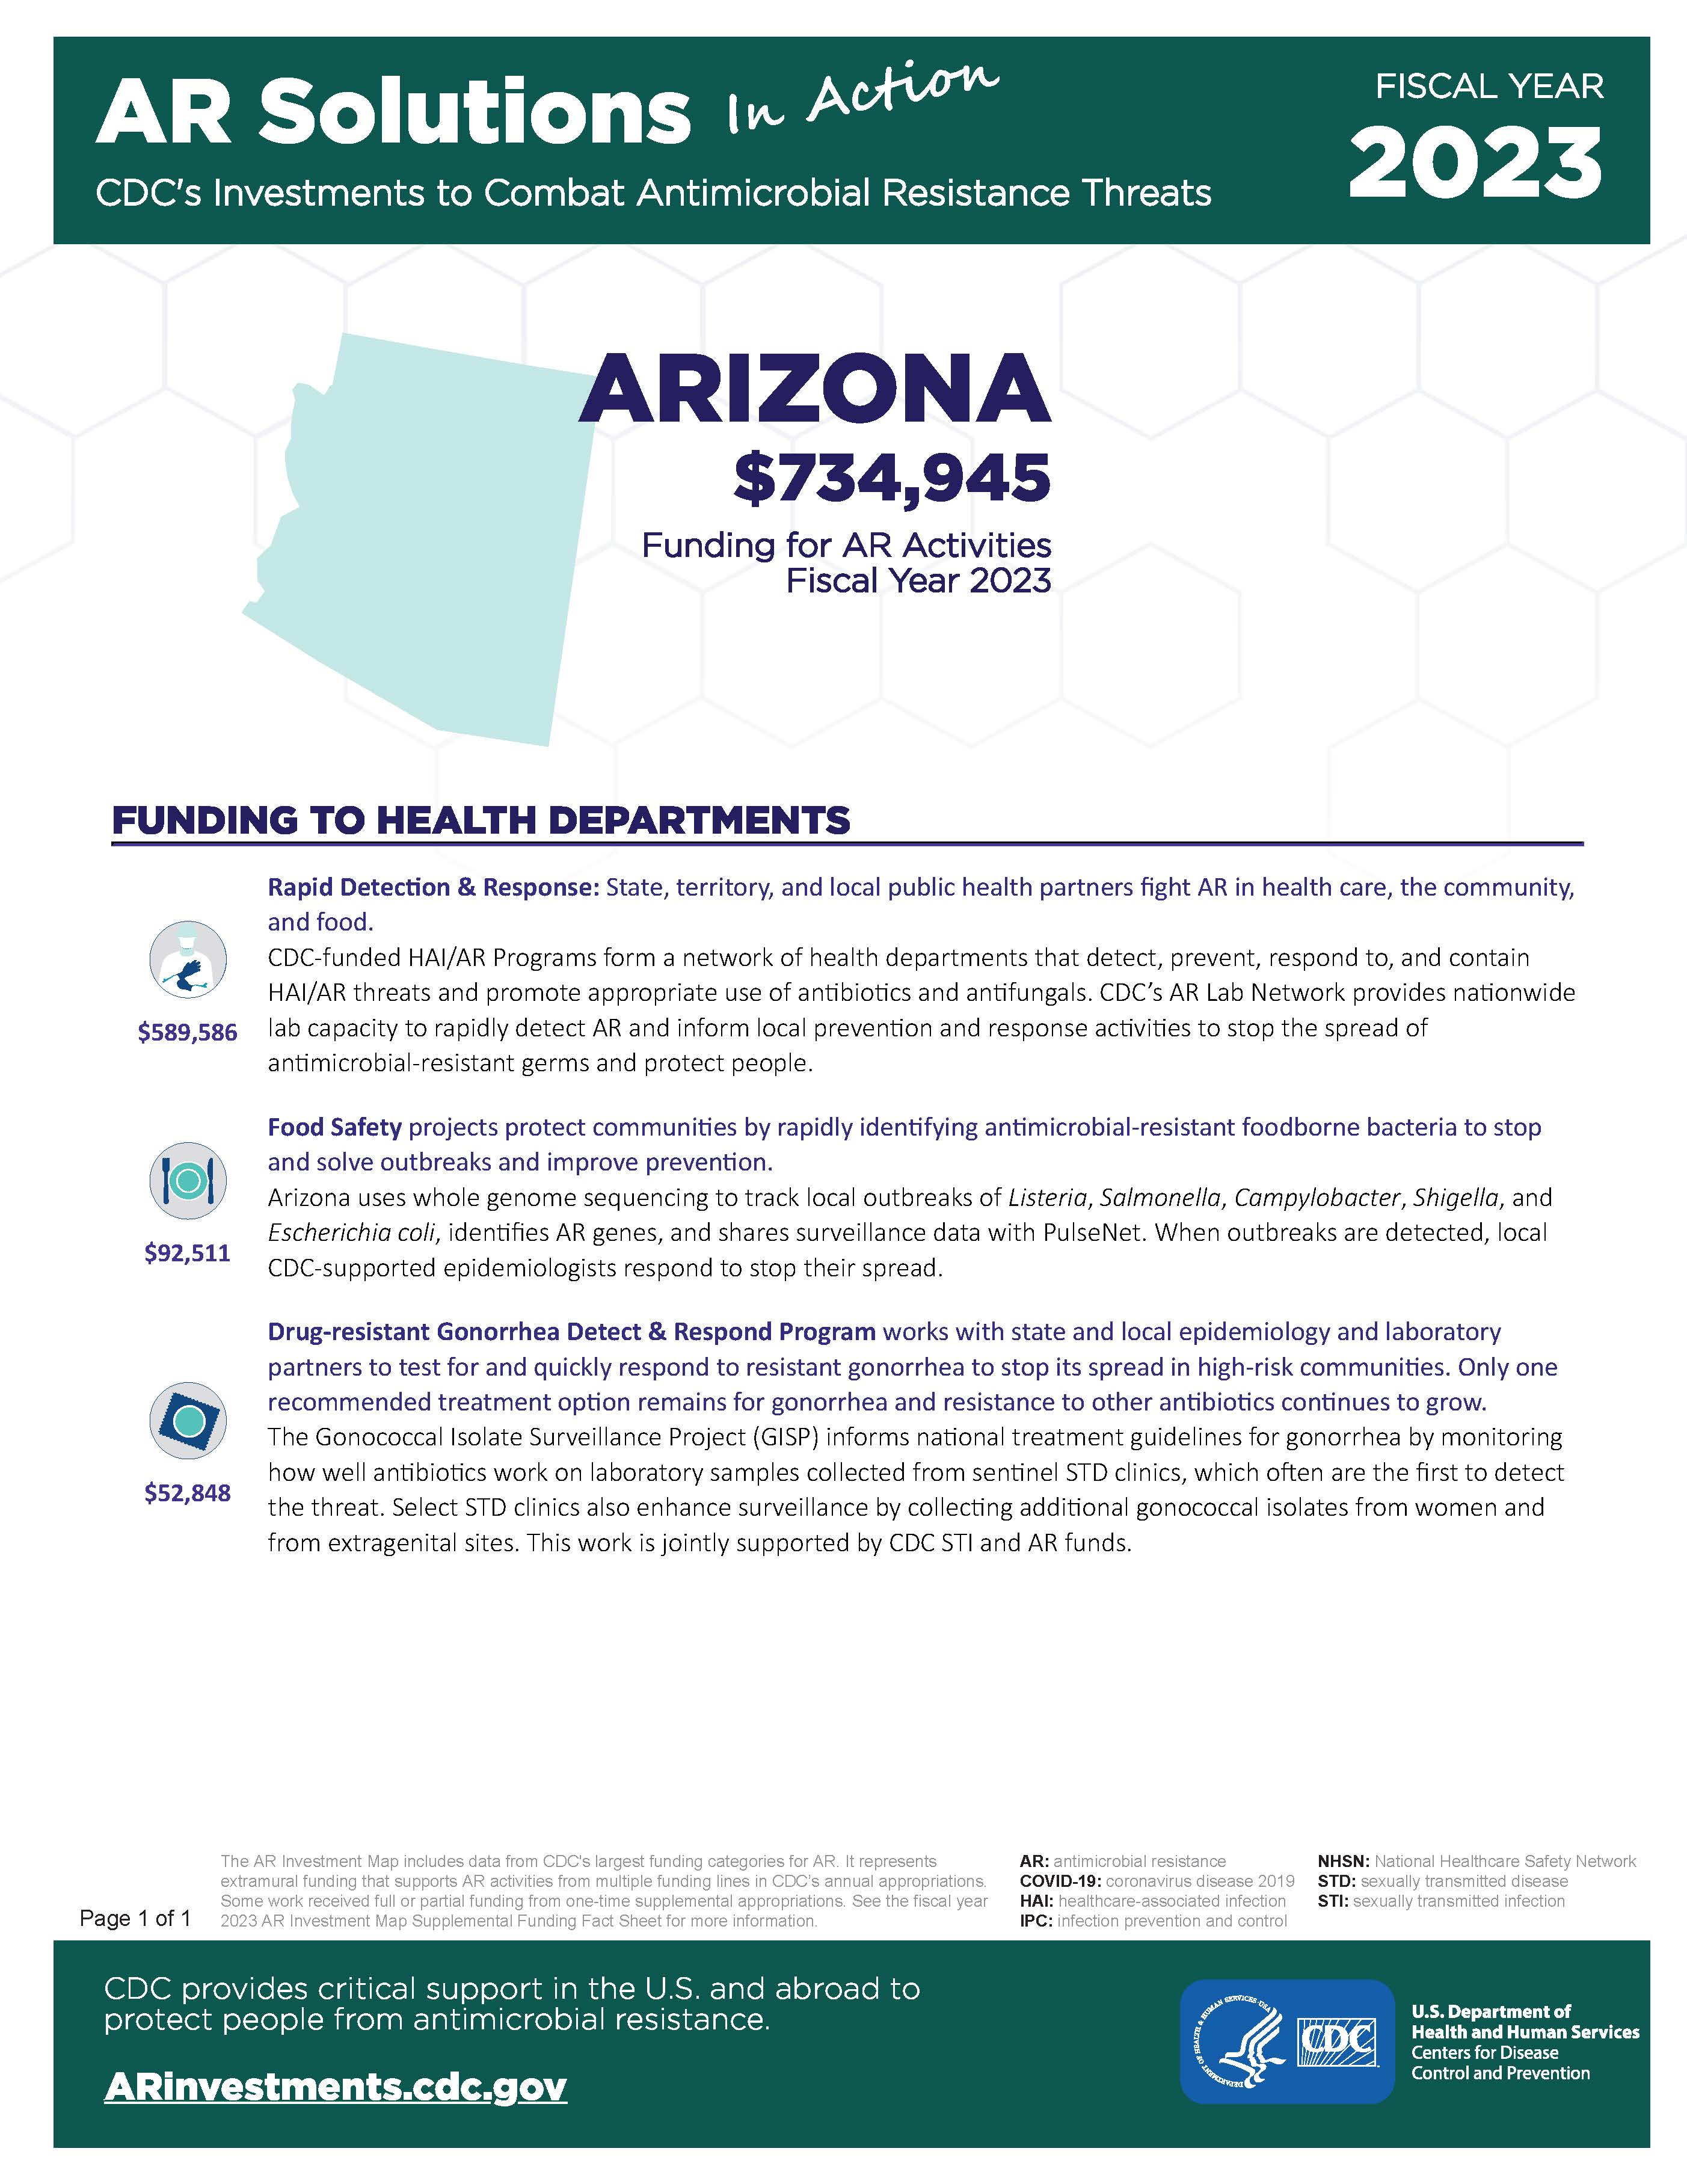 View Factsheet for Arizona